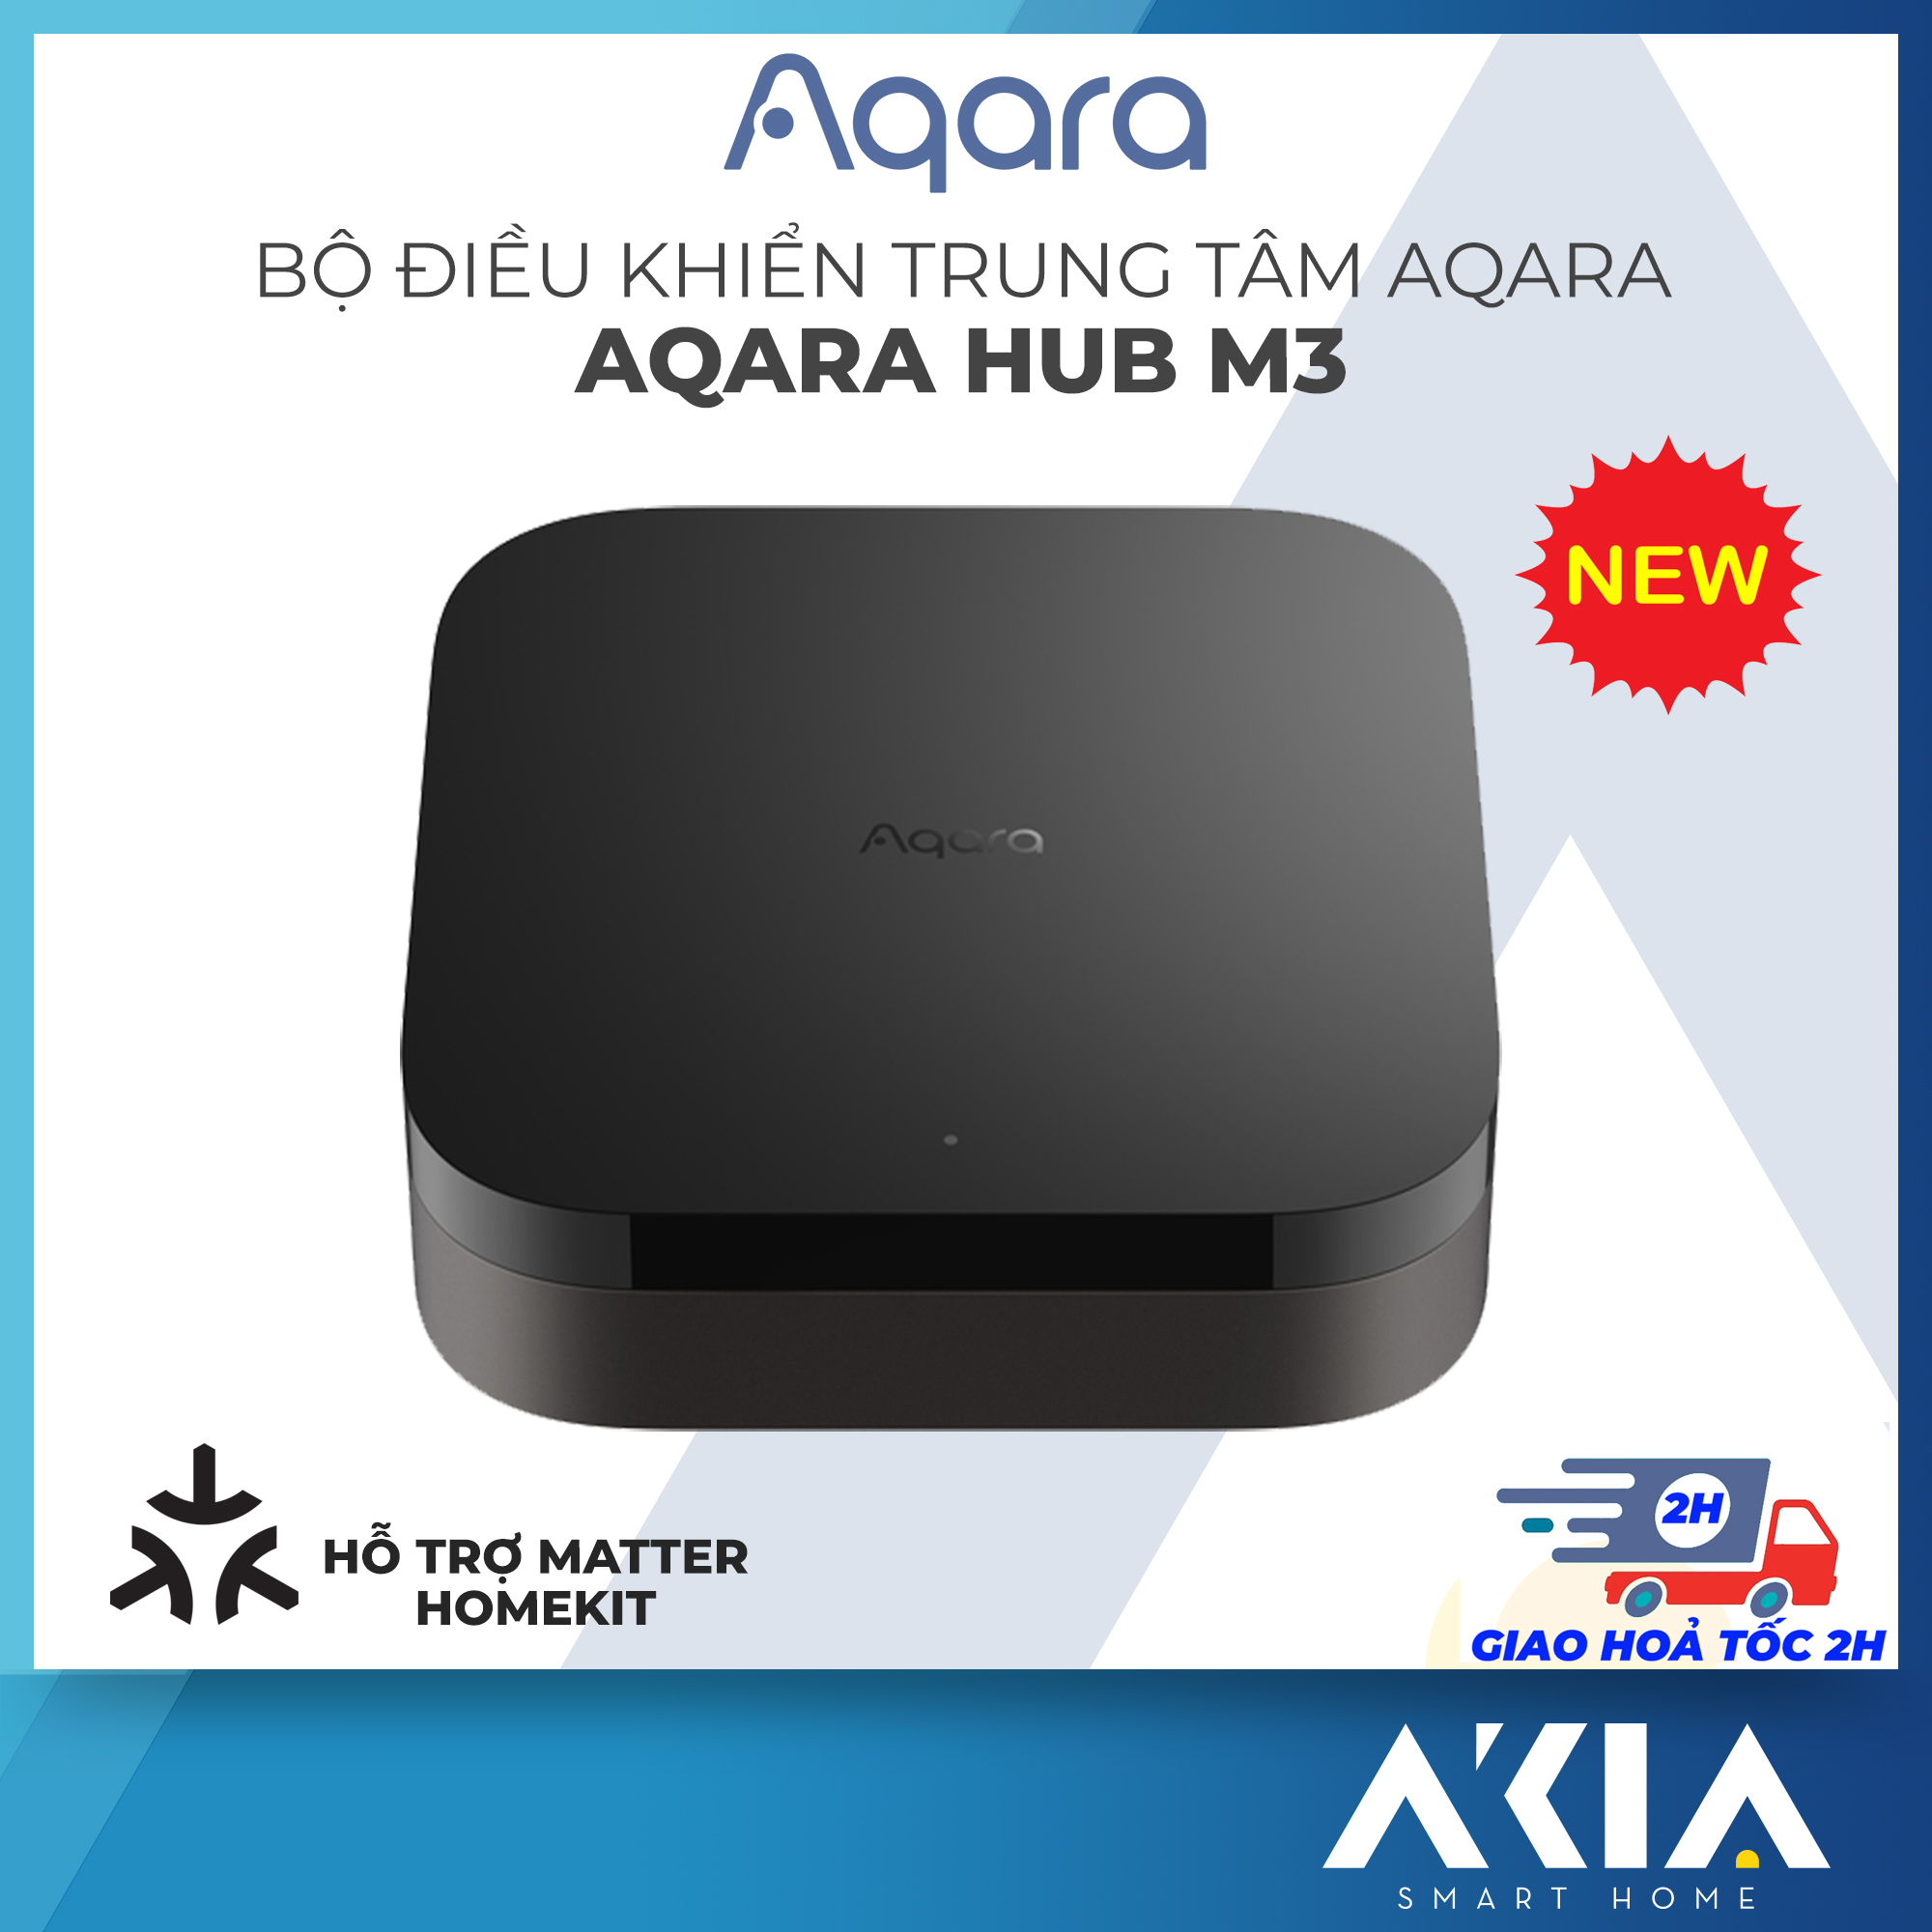 Aqara hub M3 central controller, powerful profile, 8GB eMMC memory